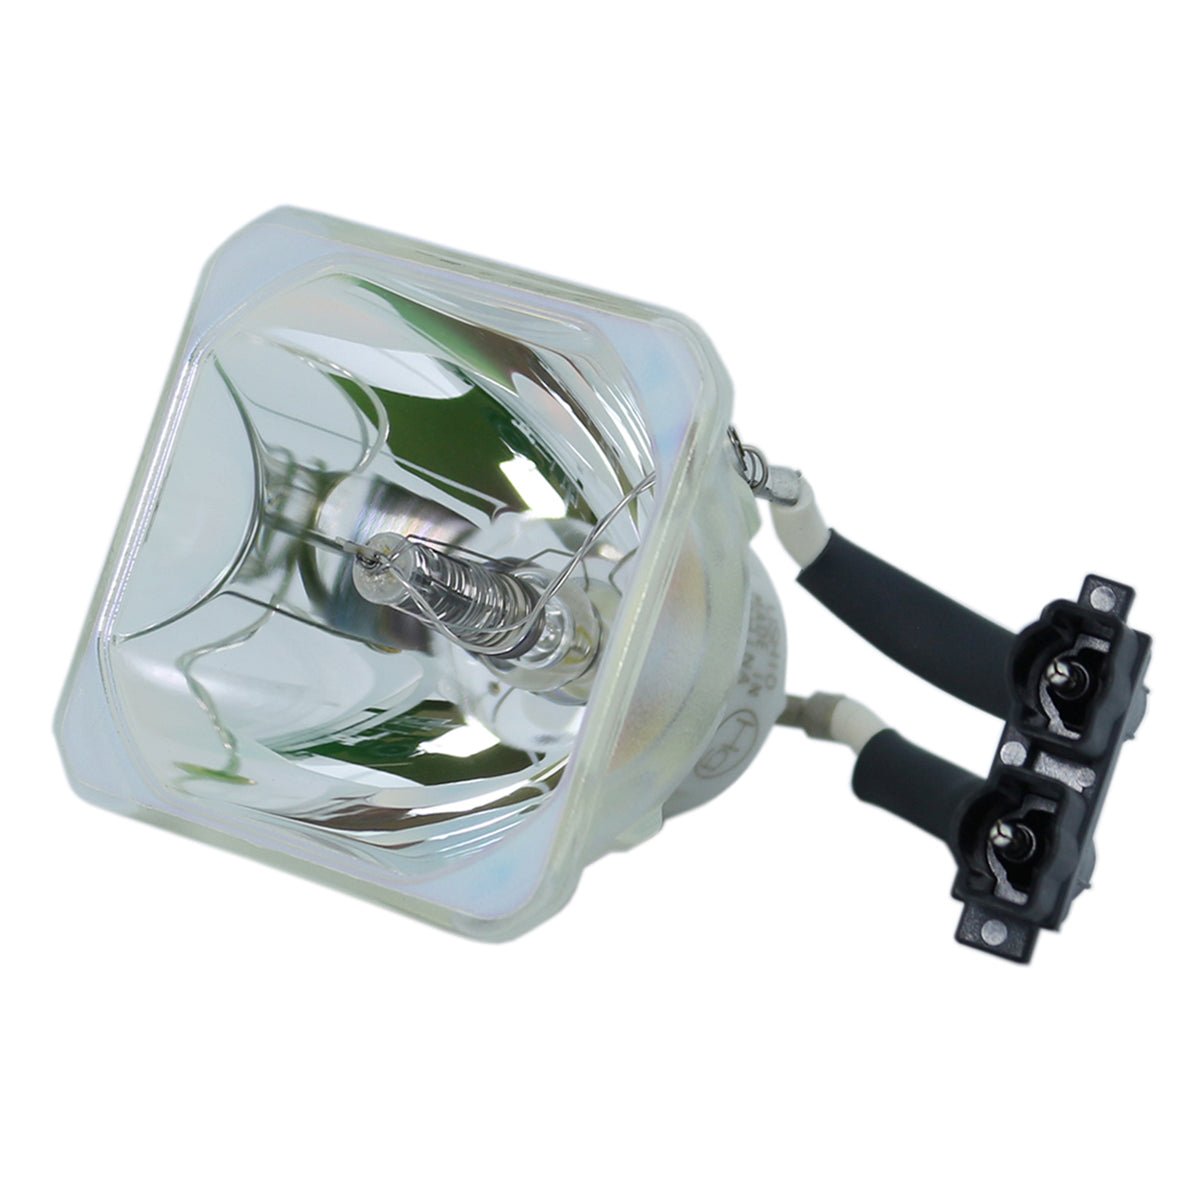 Dukane 456-8763A Ushio Projector Bare Lamp